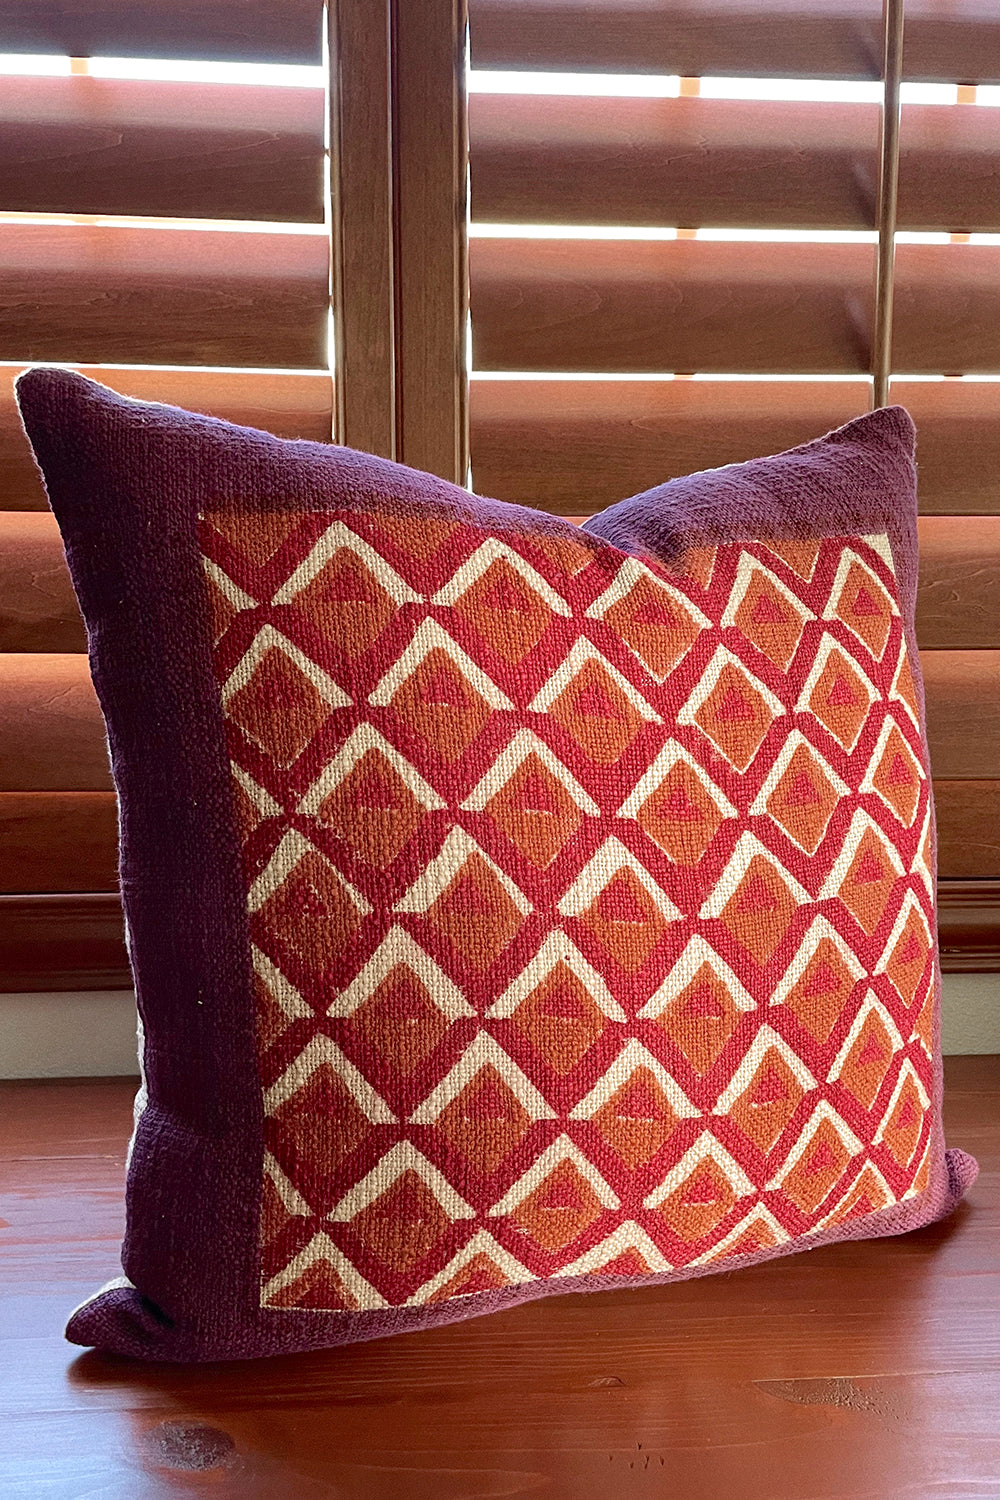 Pitaya block print pillow on a wooden desk, angled